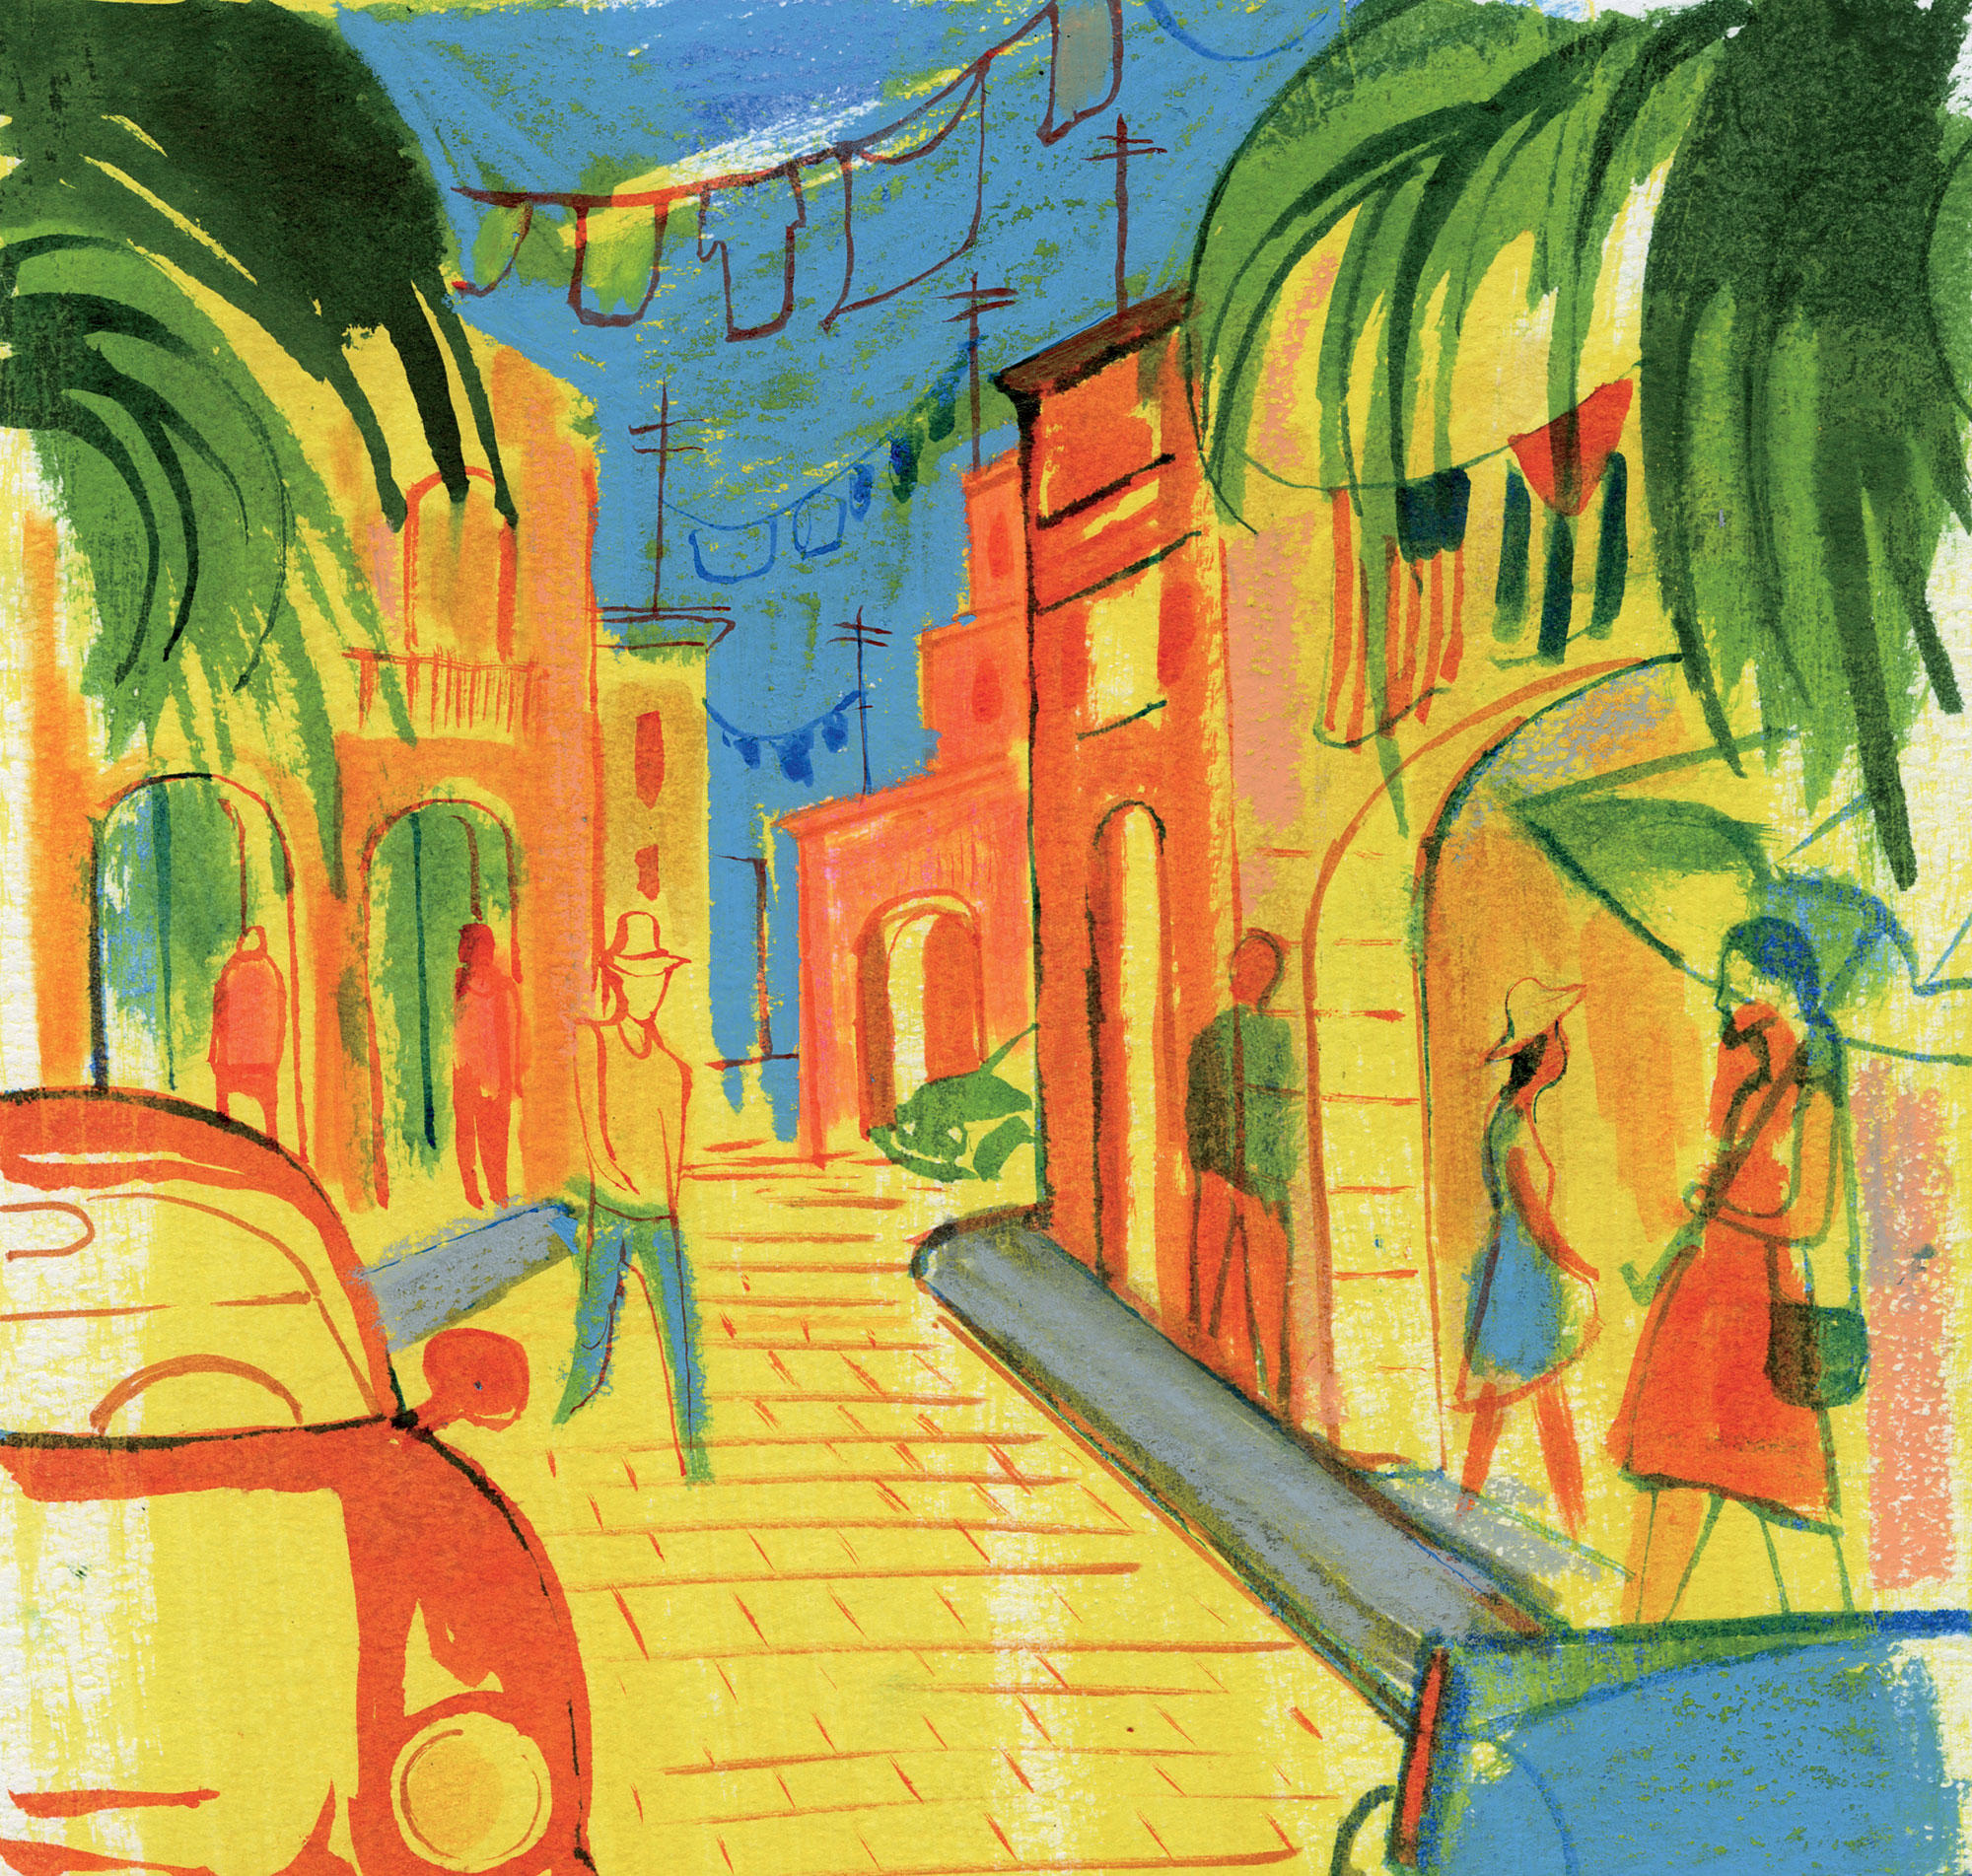 Cuba illustration